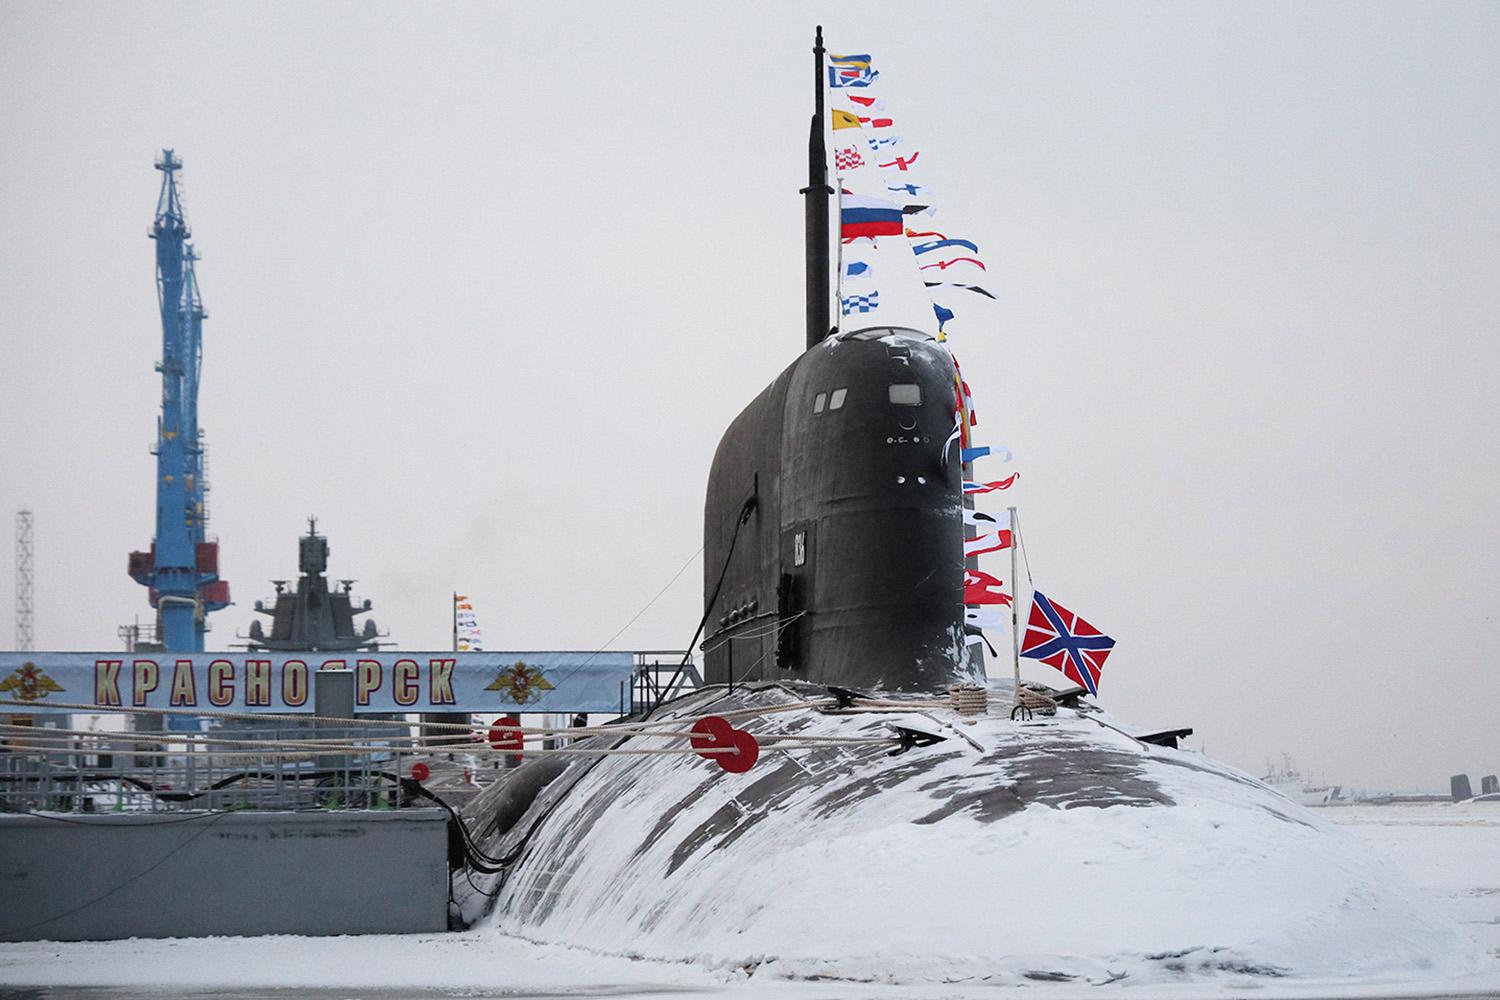 putin-unveils-2-new-nuclear-submarines-SPACEBAR-Hero.jpg